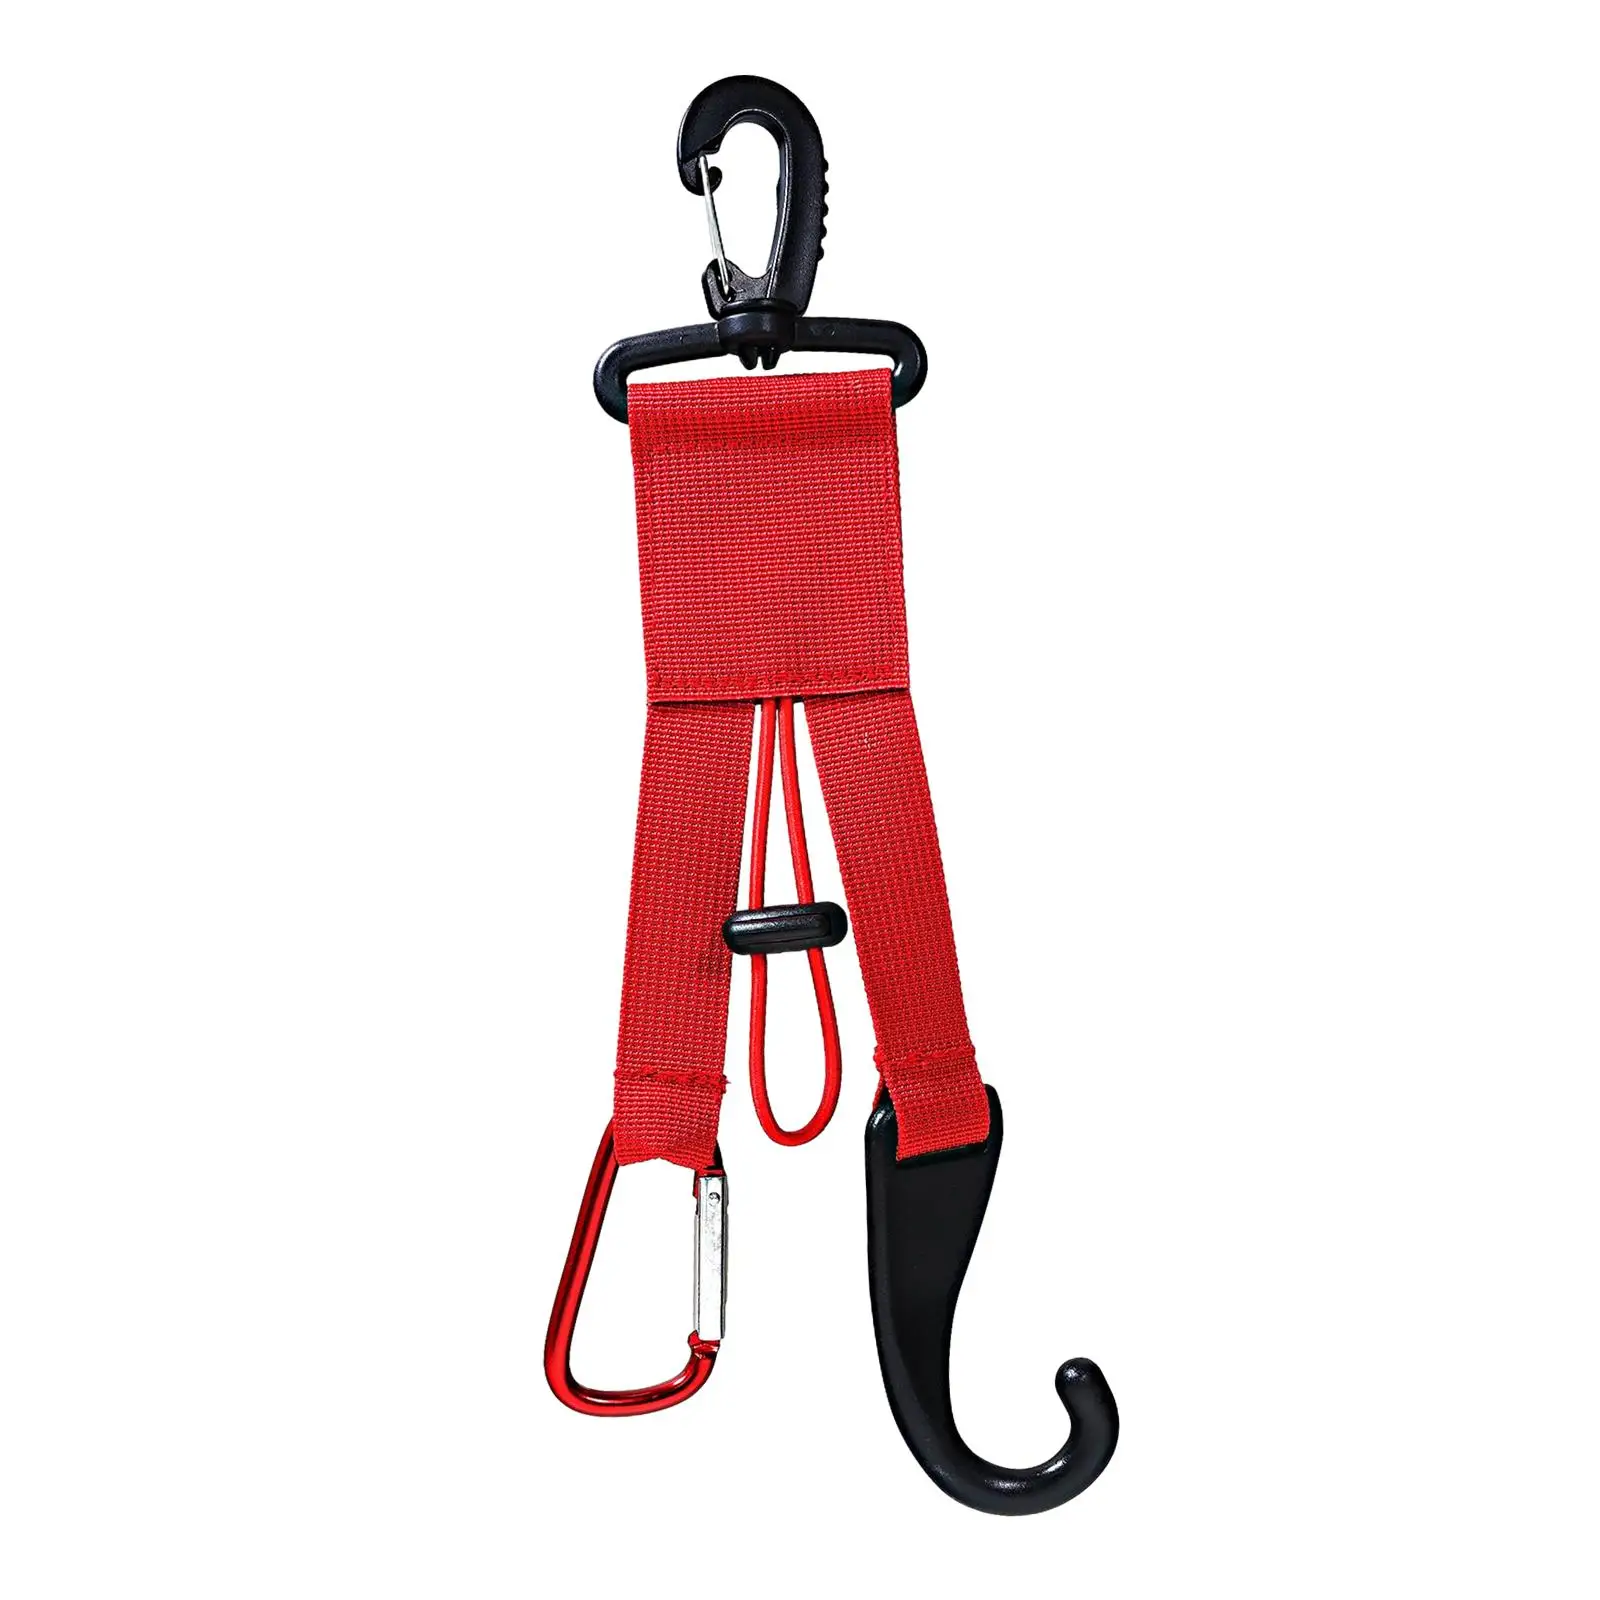 Dugout Gear Hanger Bats Hanger for Dugout Water Bottle Holder Adjustable Bungee Loop Compact Fits in Bag Dugout Organizer